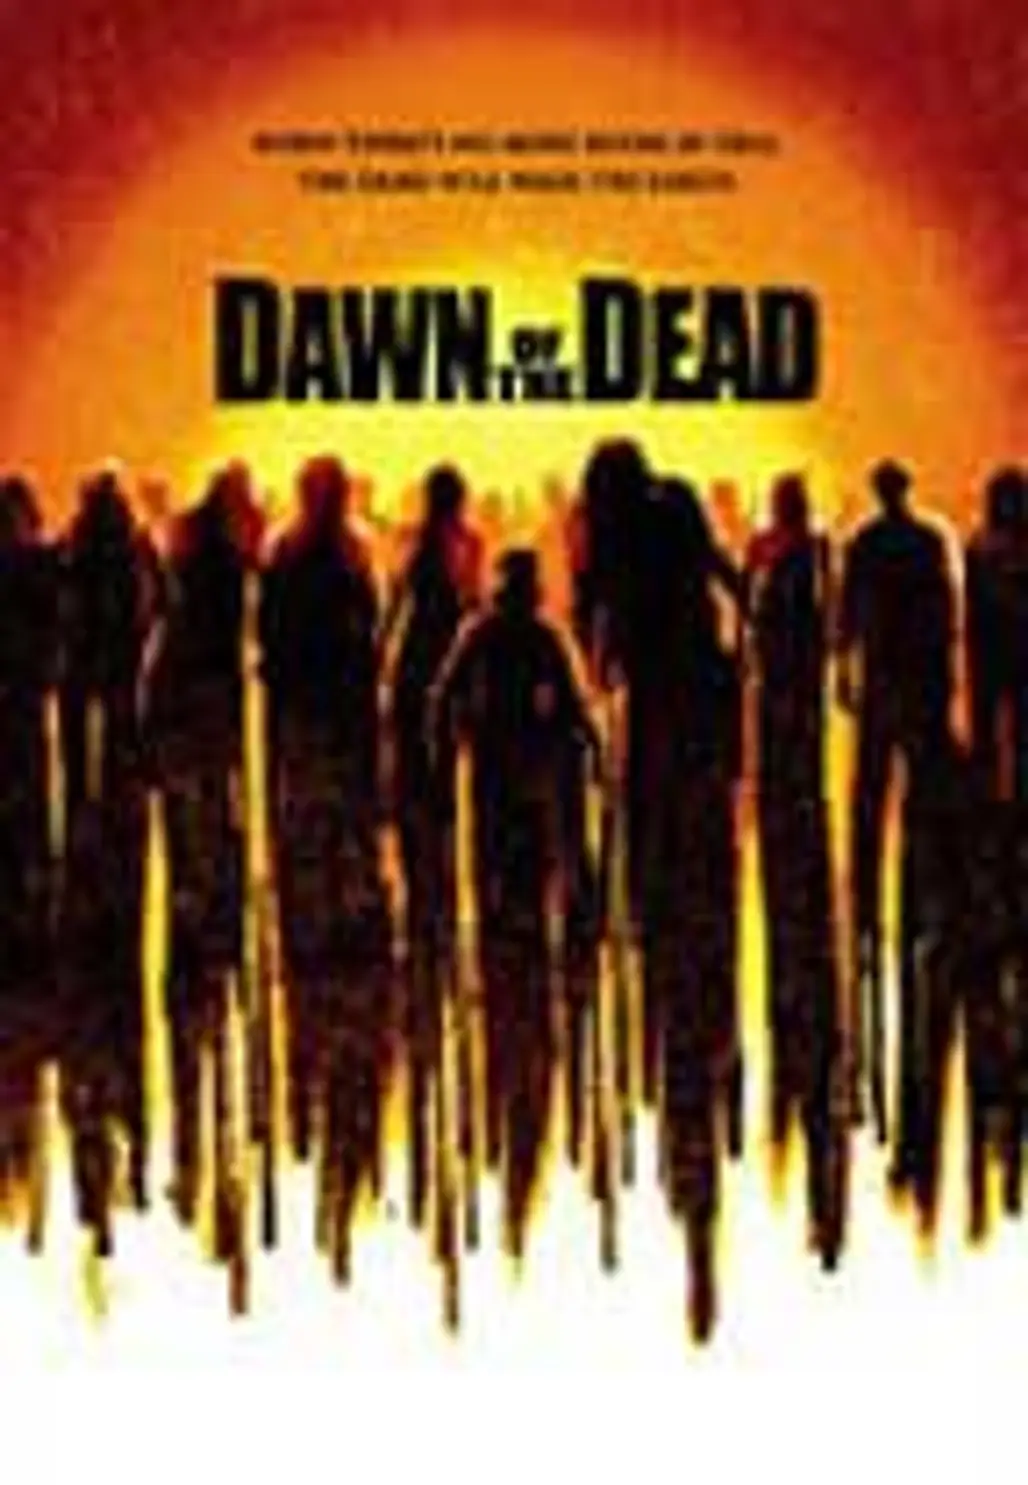 Dawn of the Dead (2004)